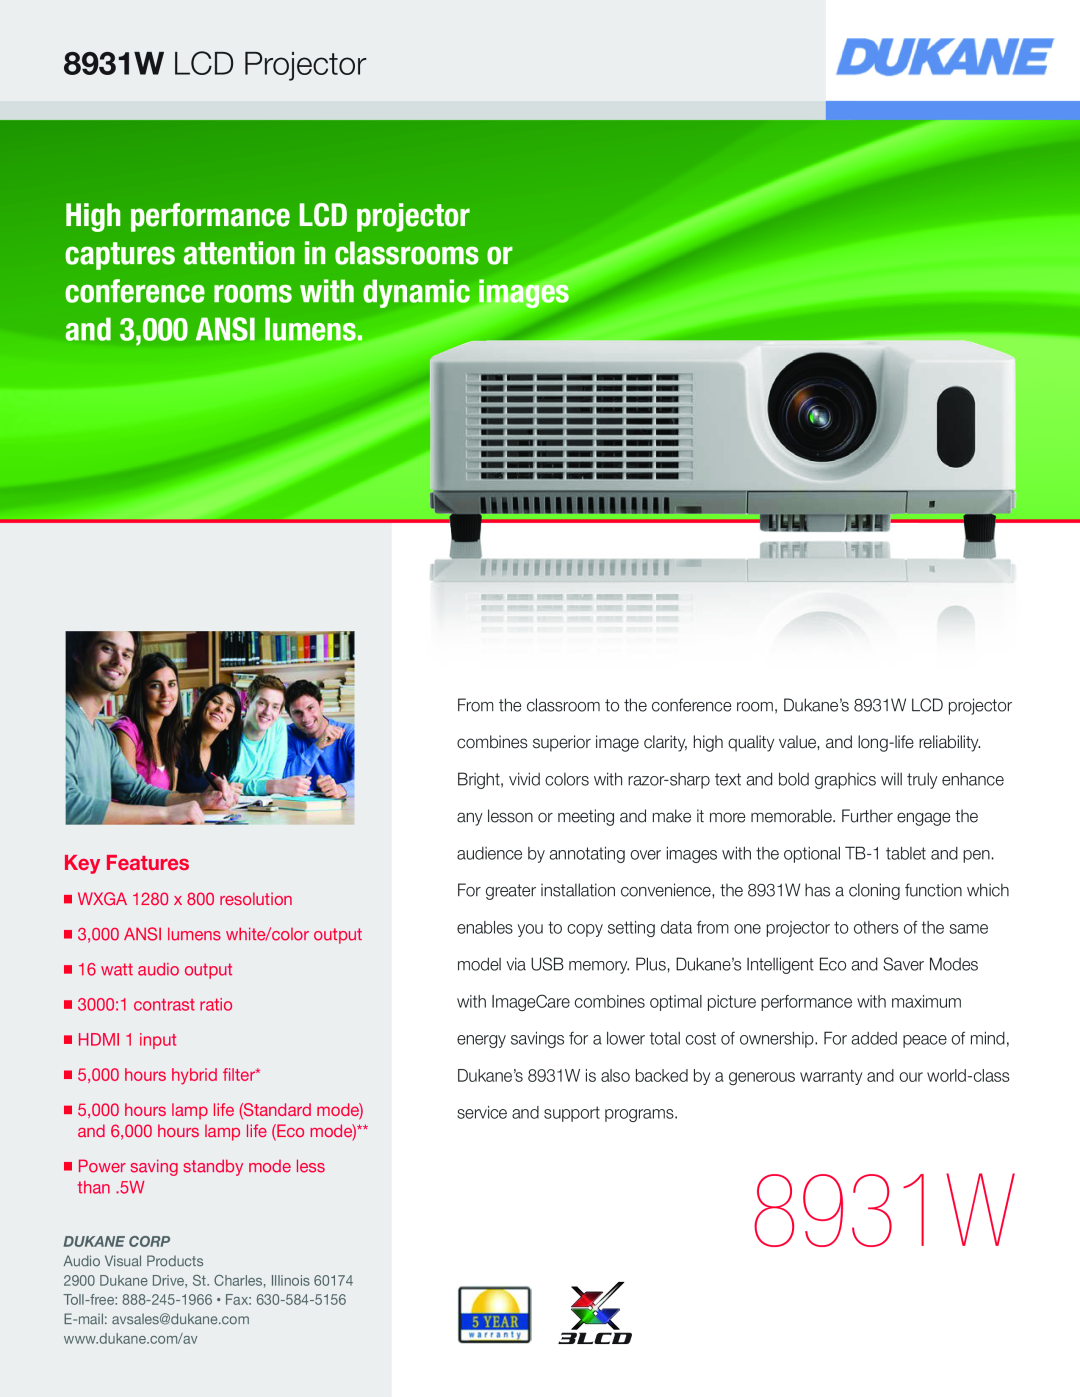 Dukane 8391W warranty 8931W LCD Projector, Key Features, watt audio output 30001 contrast ratio HDMI 1 input 